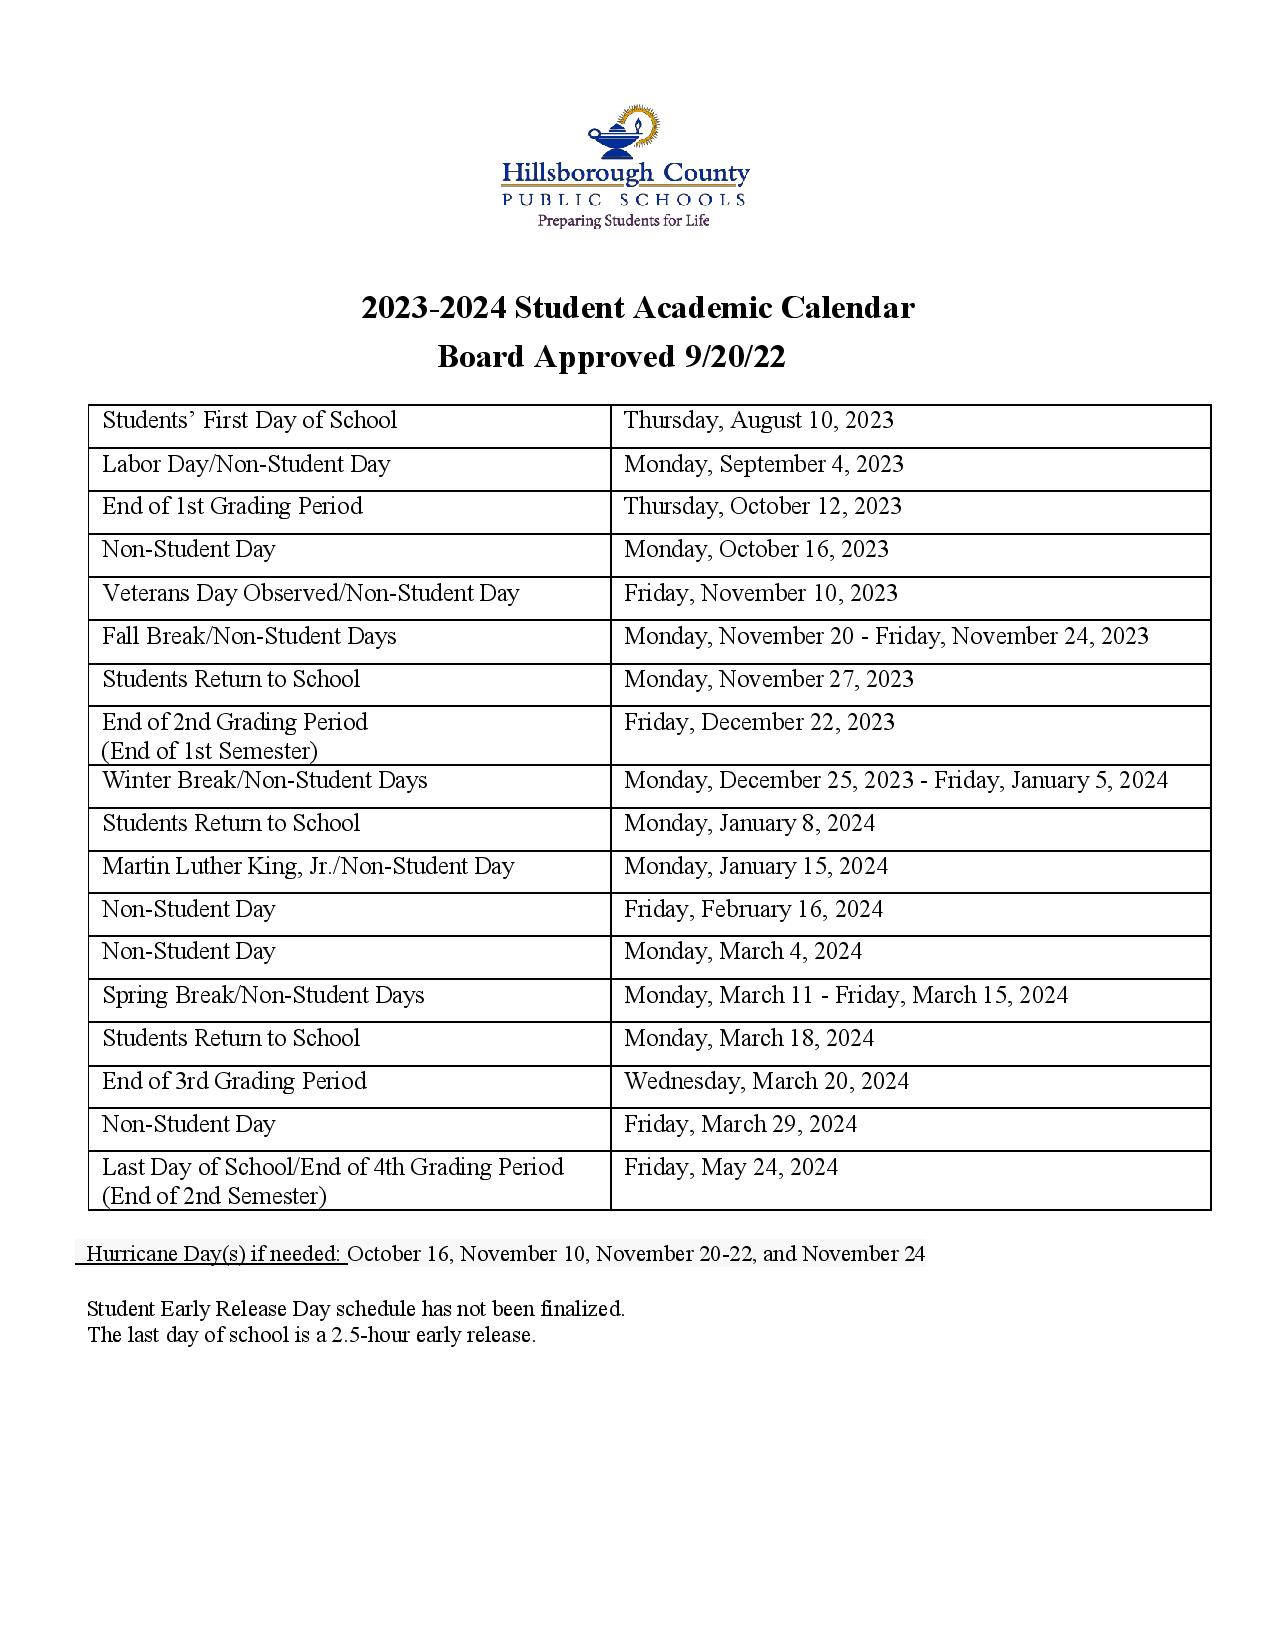 Lake County School Calendar 2025